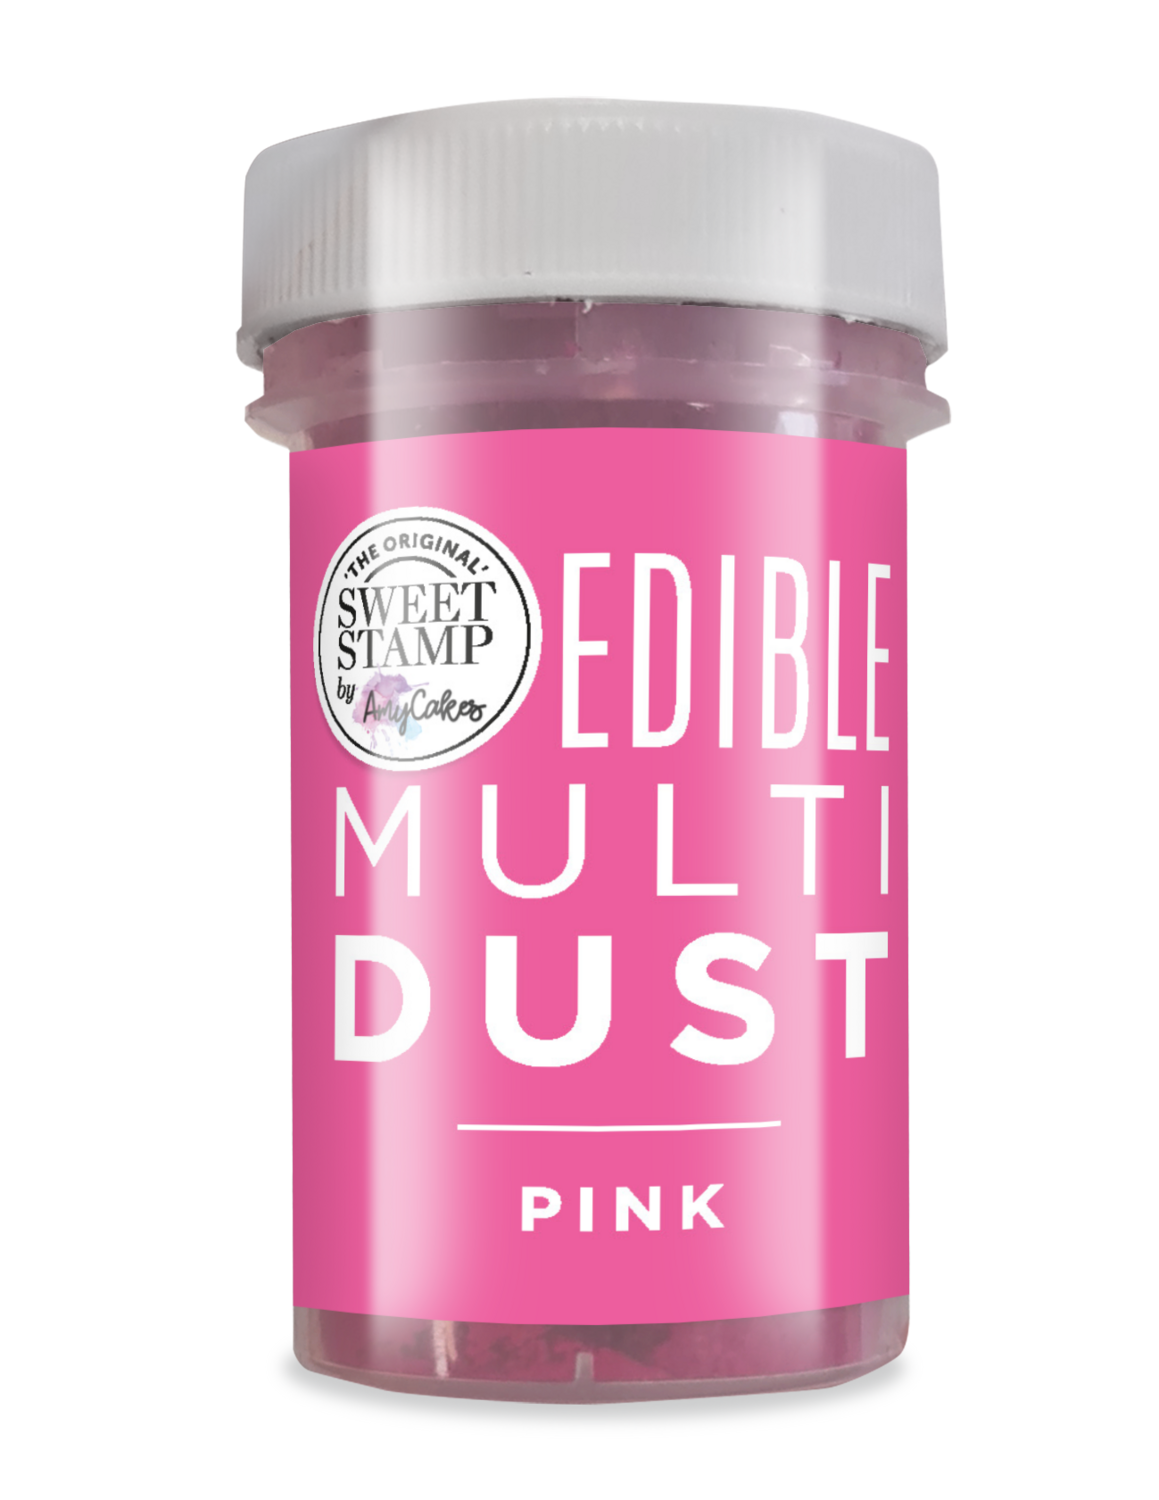 Sweet Stamp Edible Multi Dust -PINK - Βρώσιμη σκόνη Ματ Ροζ 3g